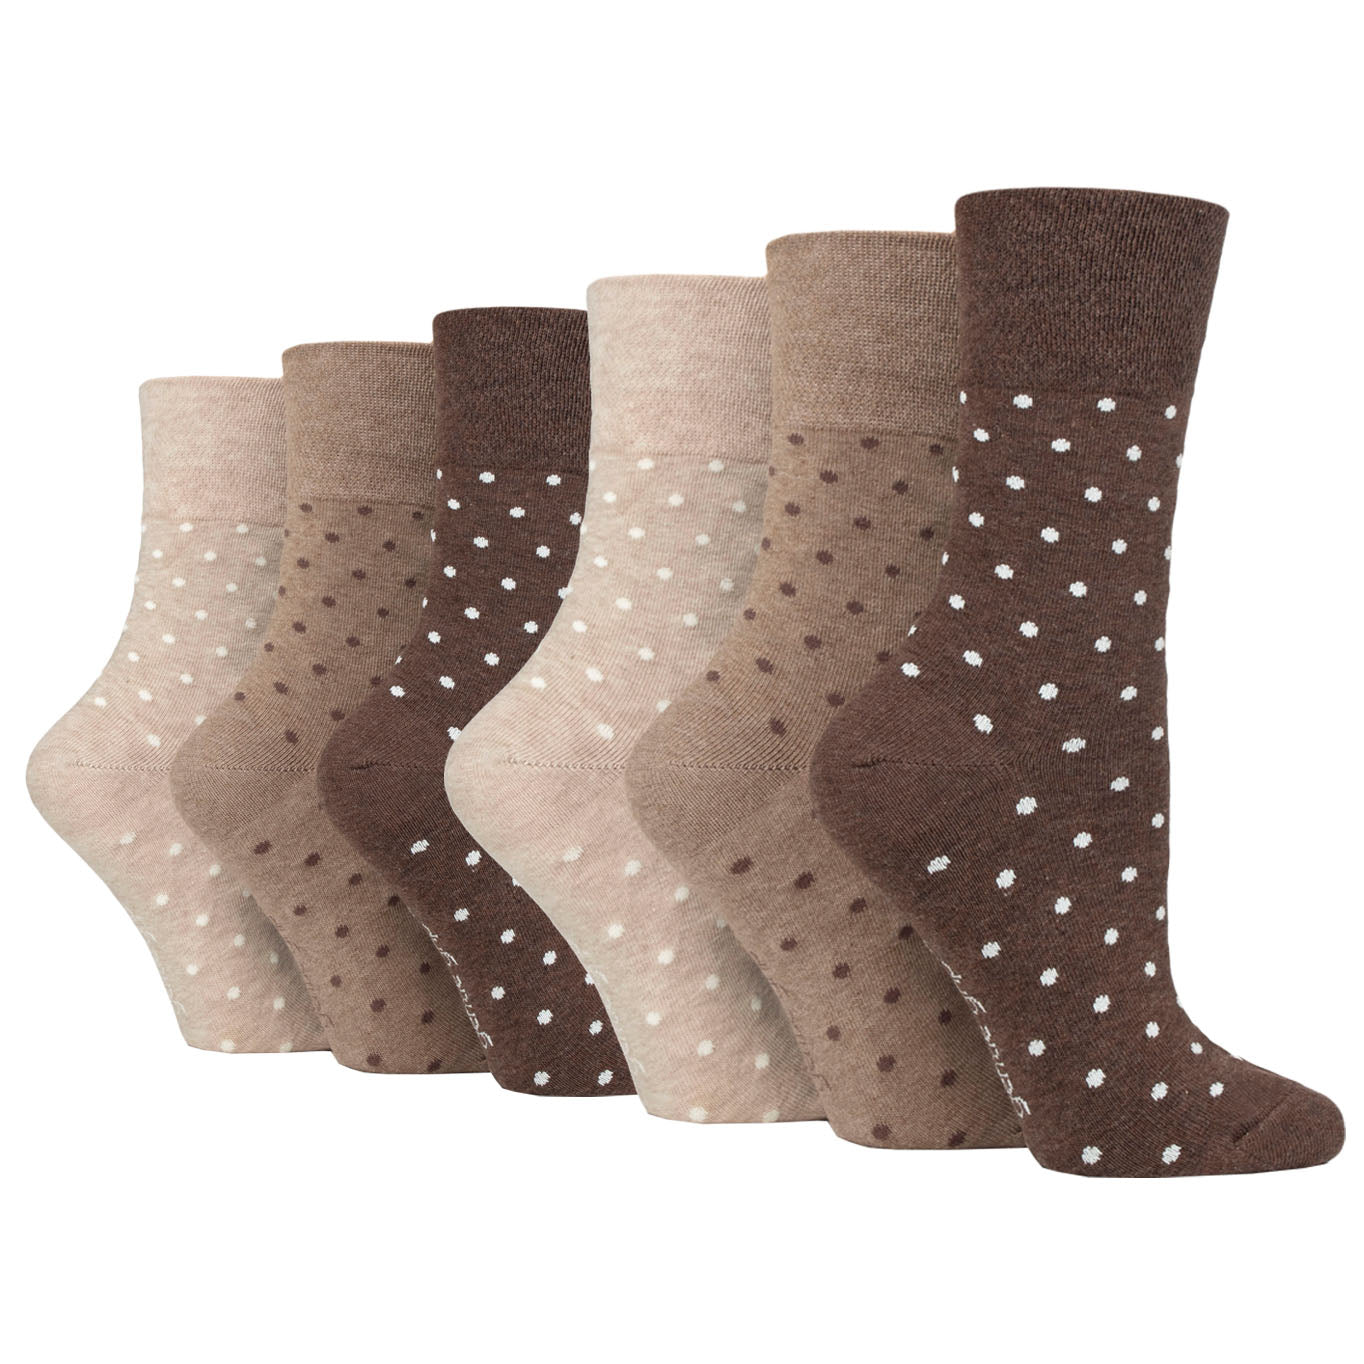 6 Pairs Ladies Gentle Grip Cotton Socks Digital Dots Dots Brown/Neutral